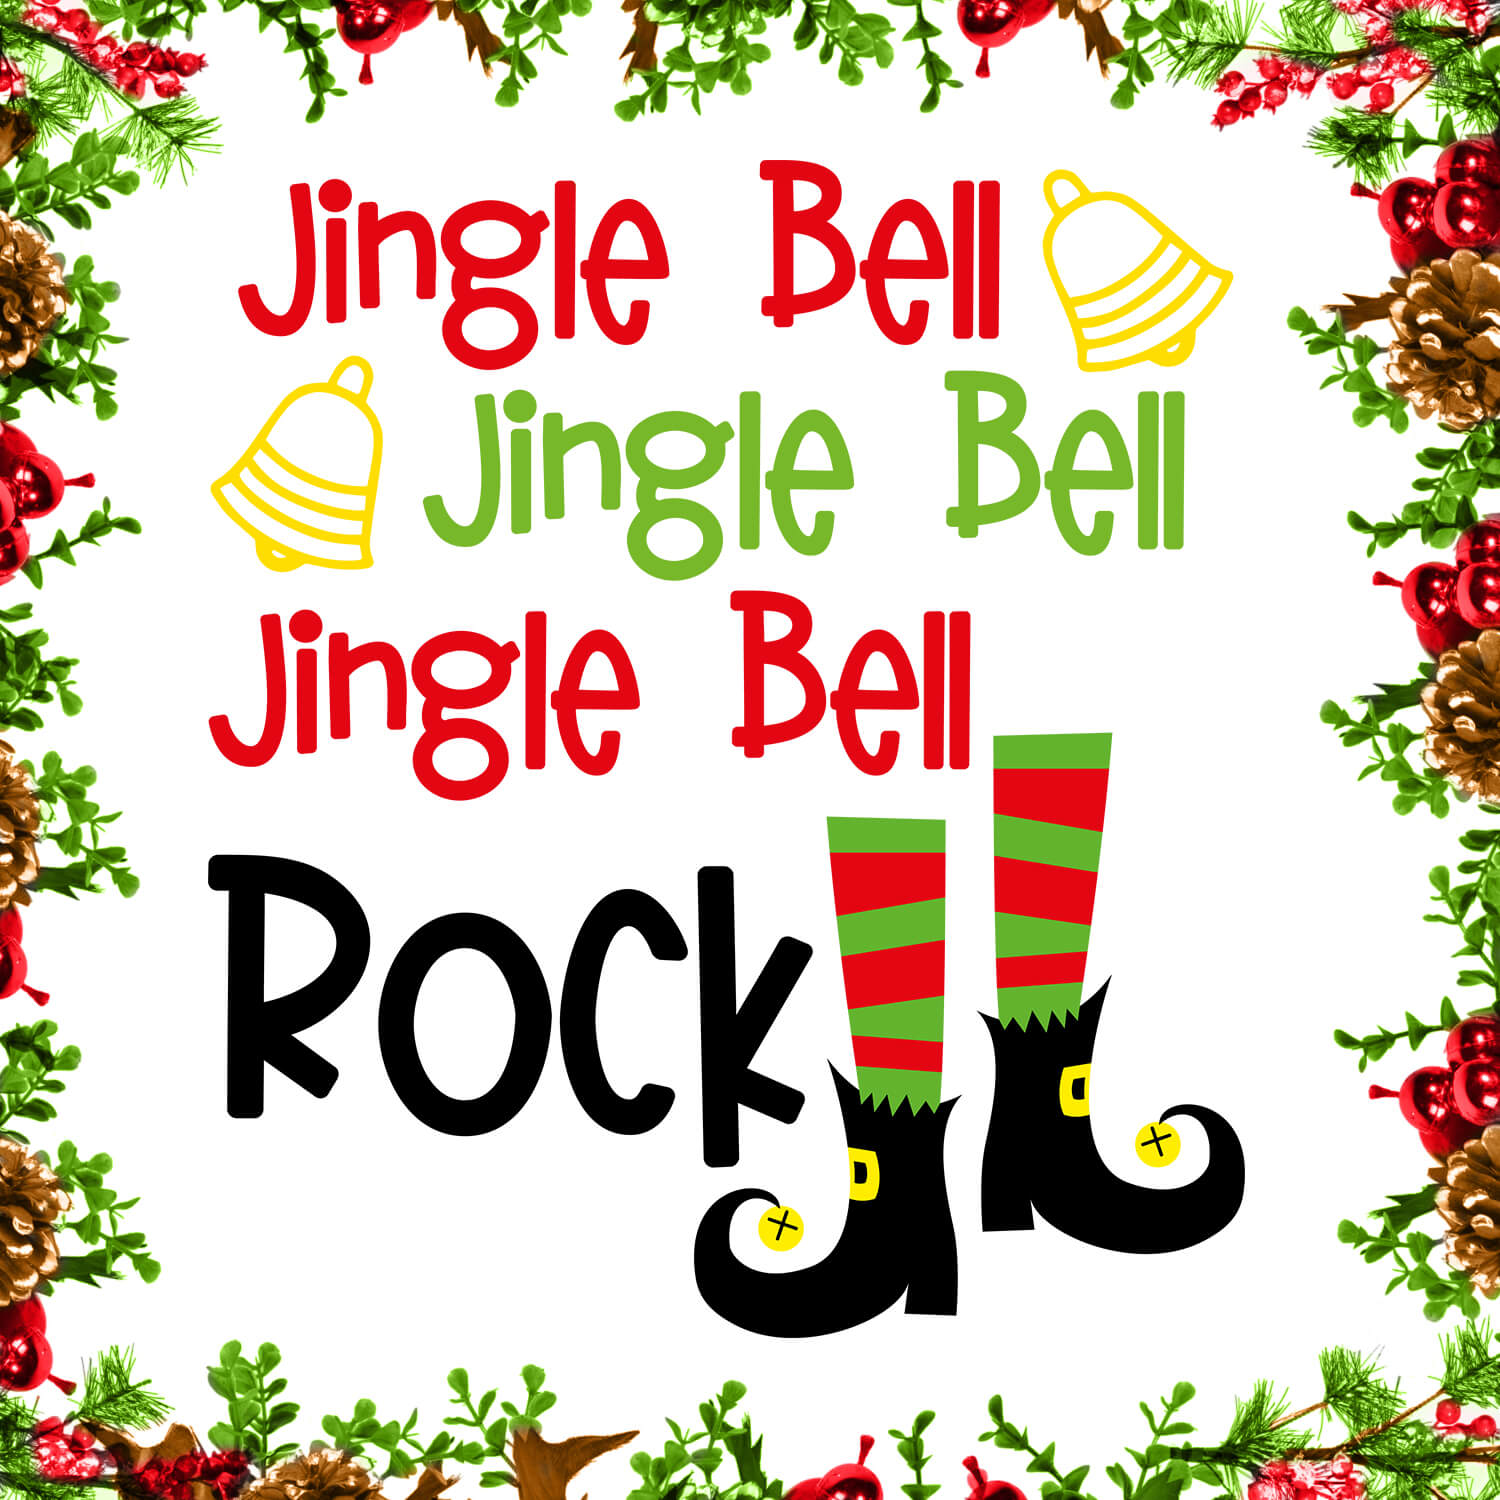 Christmas jingle bell rock free SVG files cover image.